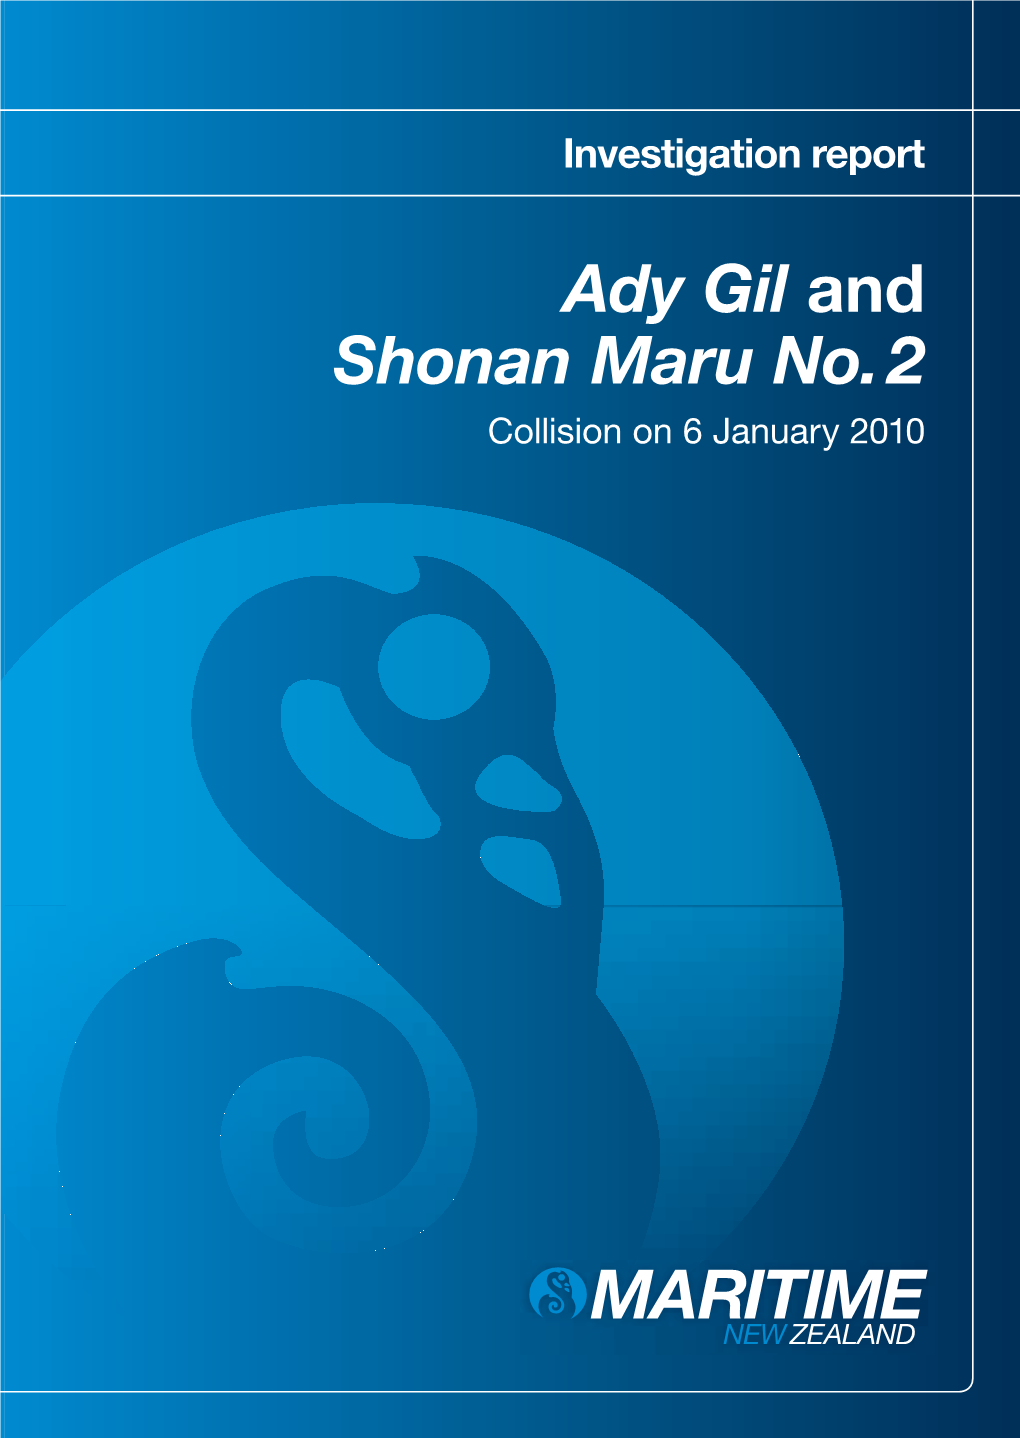 Ady Gil and Shonan Maru No. 2 Collision on 6 January 2010 Maritime New Zealand Investigation Report: Ady Gil and Shonan Maru No